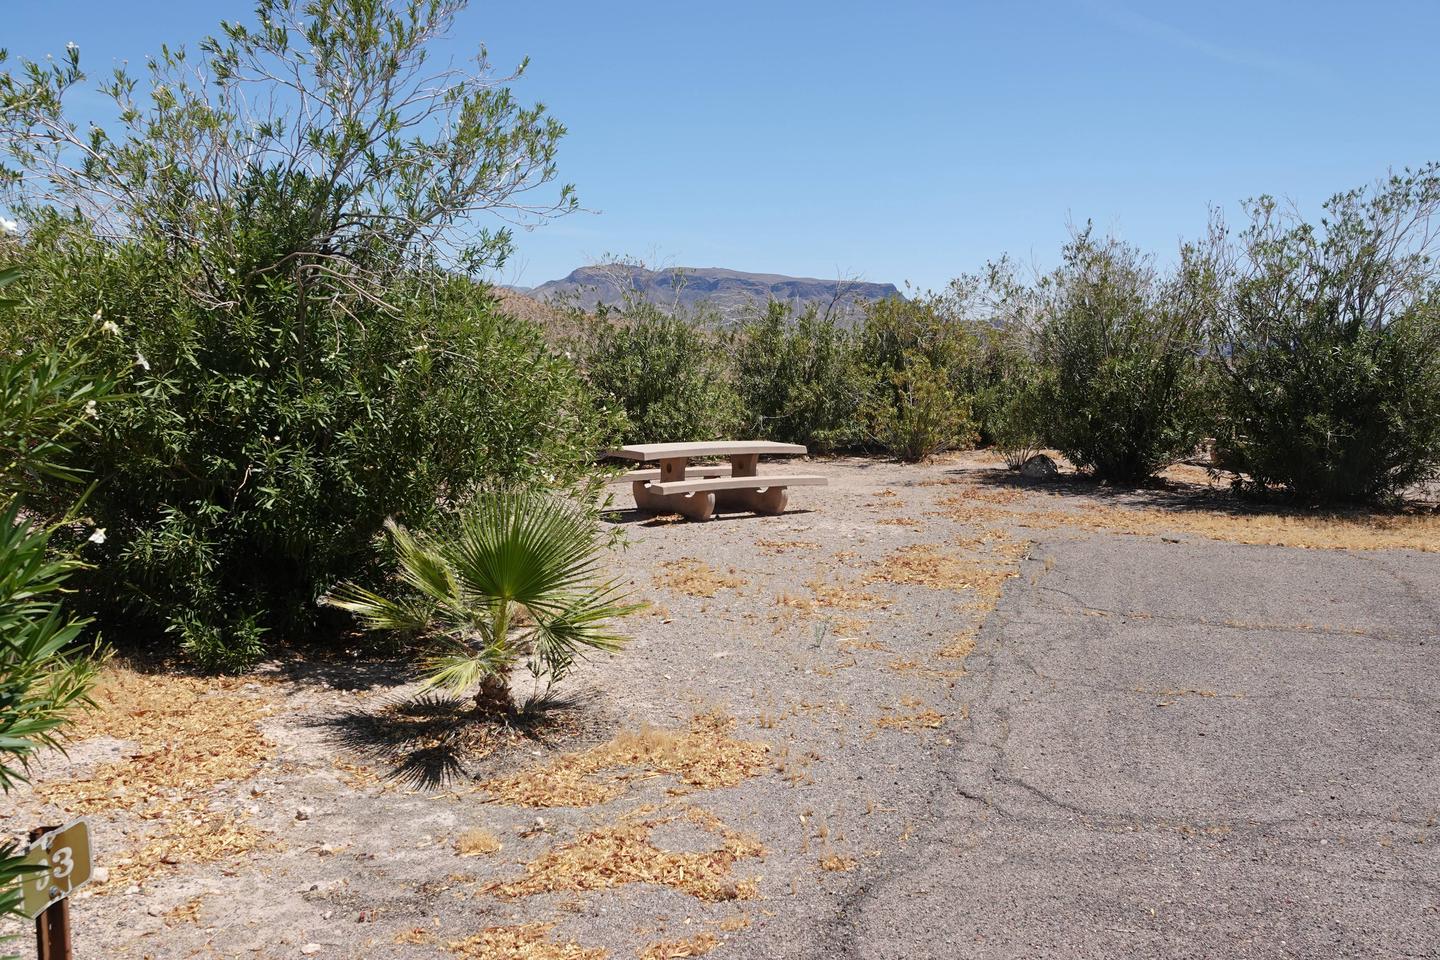 Campsite located in a desert setting1Callville Bay Campground Site 33